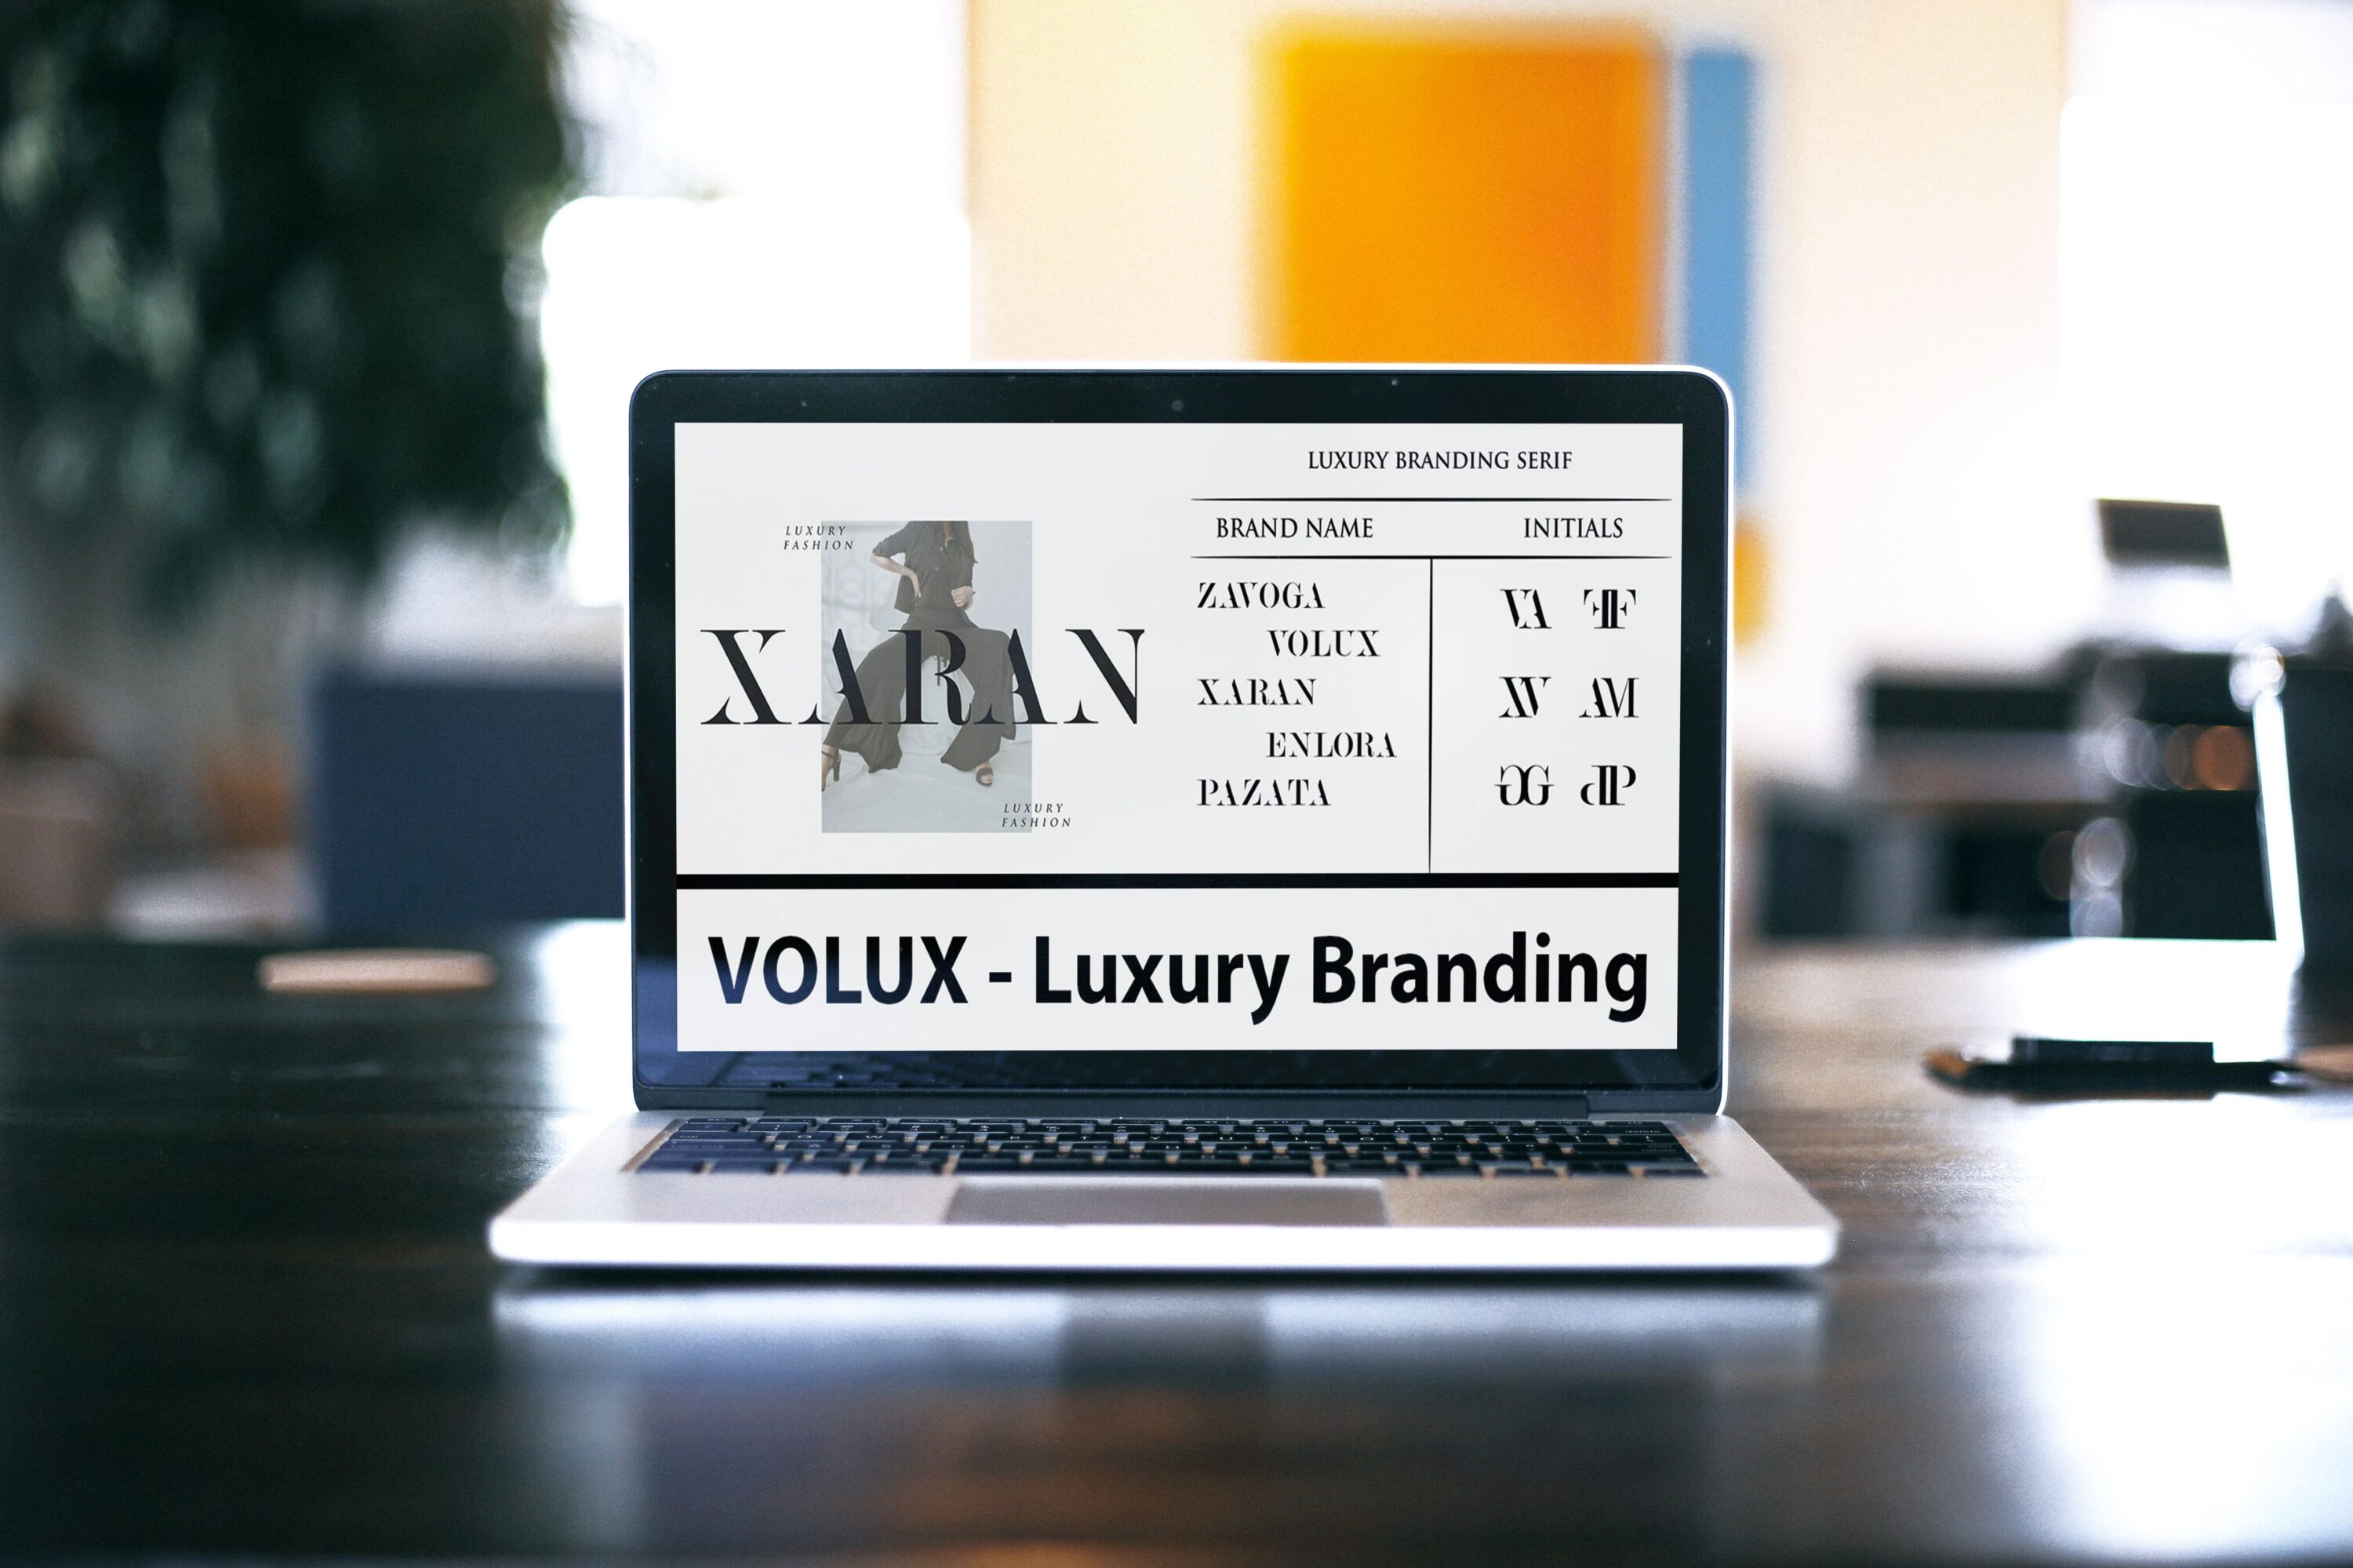 Laptop option of the VOLUX - Luxury Branding.